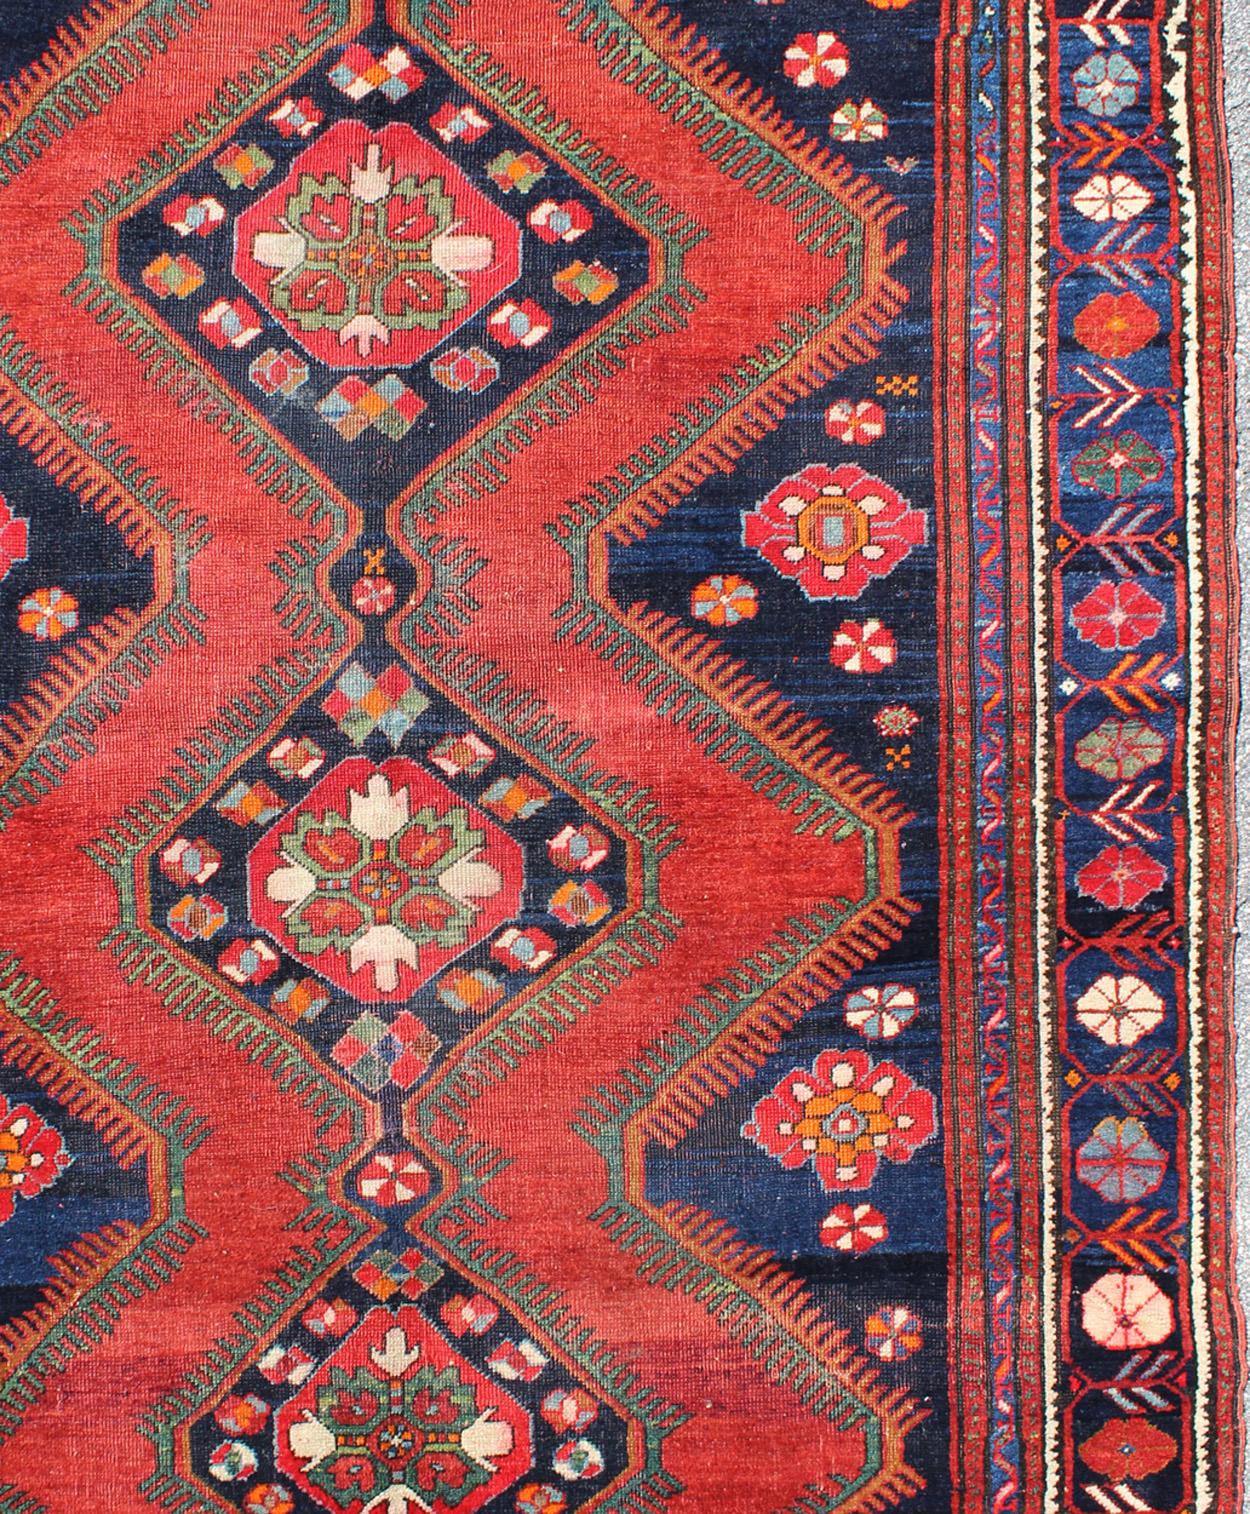 Geometric design antique Caucasian Karabagh tribal rug, rug / B-0501. Caucasian rug.

Measures: 5'6 x 7'5

This antique Kurdish piece features an tribal geometric pattern with three diamond shape medallions. Rich Colors include beautiful tomato